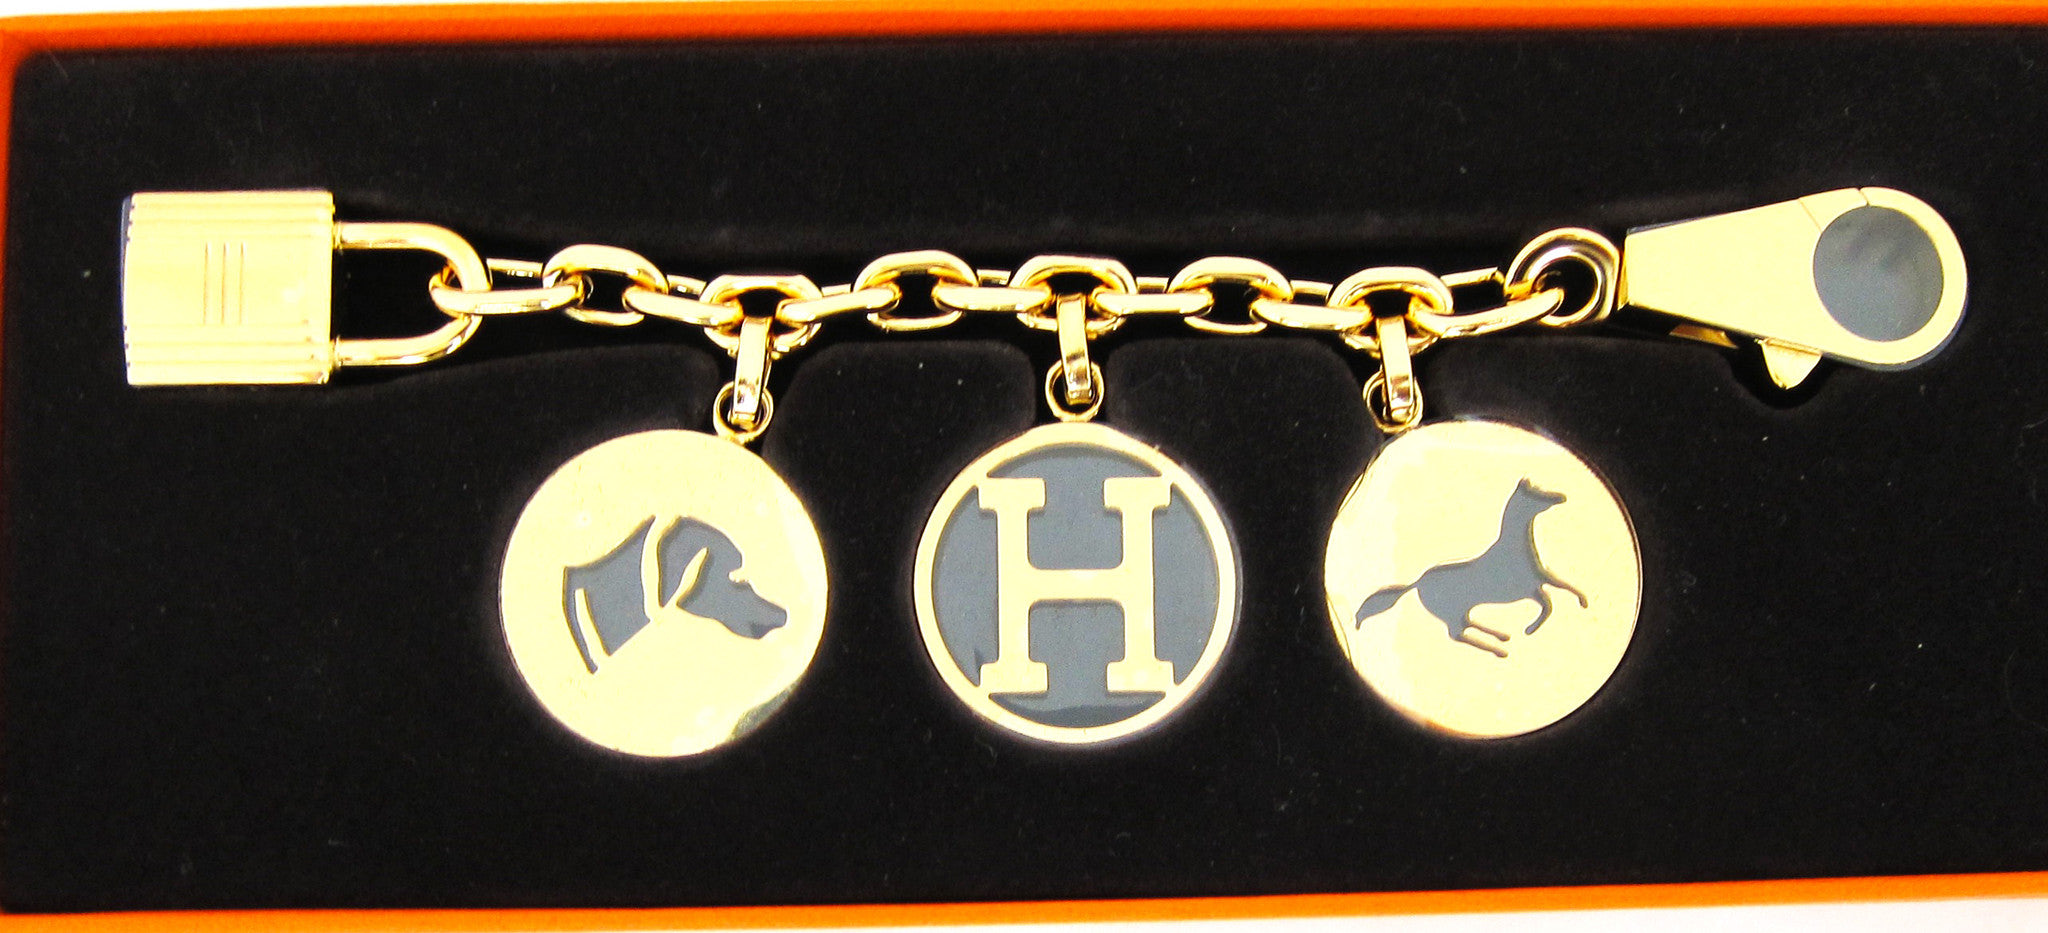 Very Rare - Brand New Silver Hermes Breloque Charm / Bag Chain